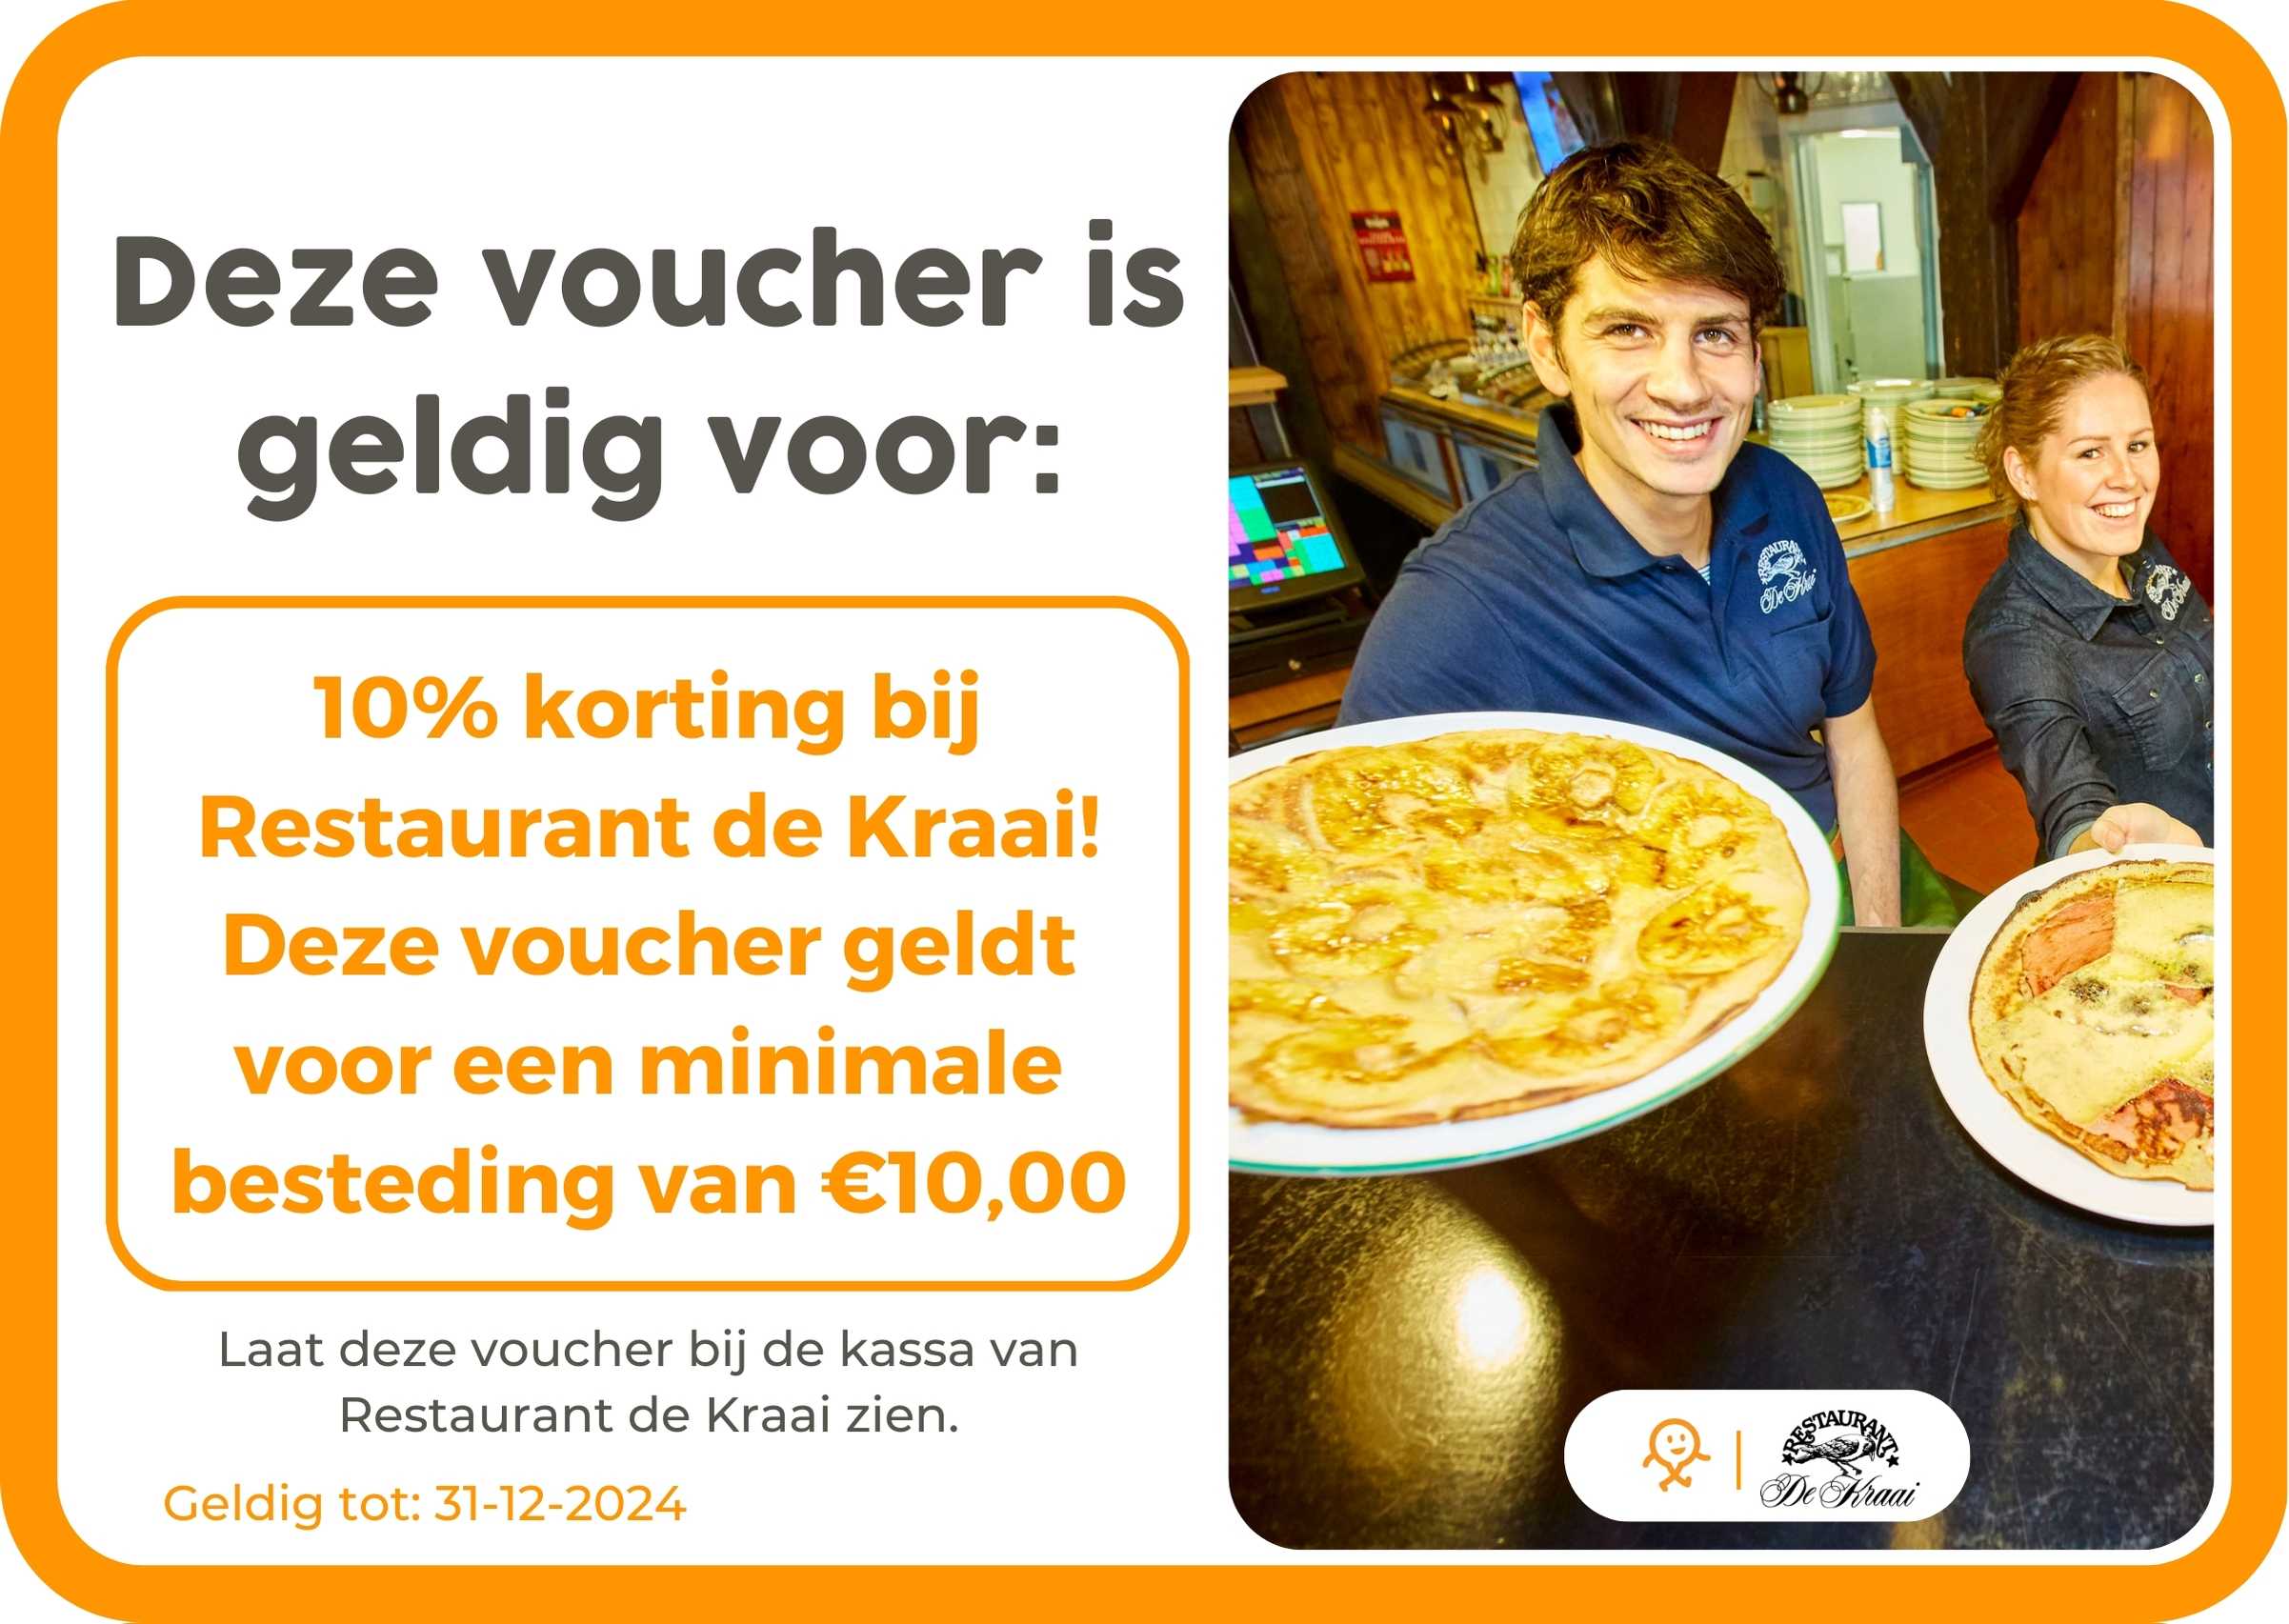 Restaurant de Kraai NL